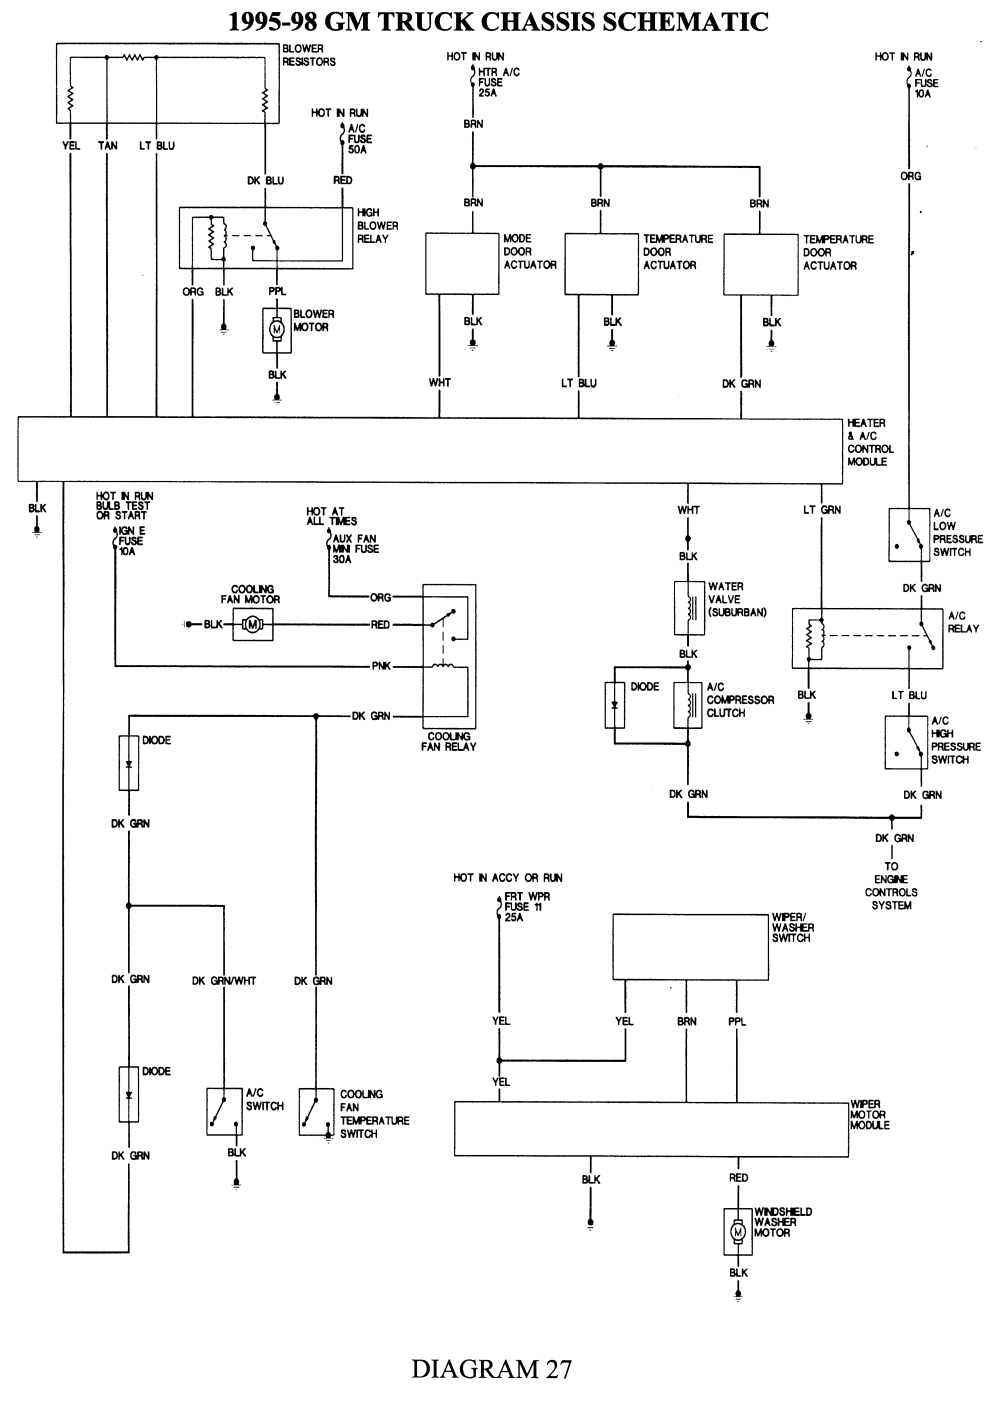 repair guides wiring diagrams wiring diagrams autozone comwiring diagrams for trucks 6